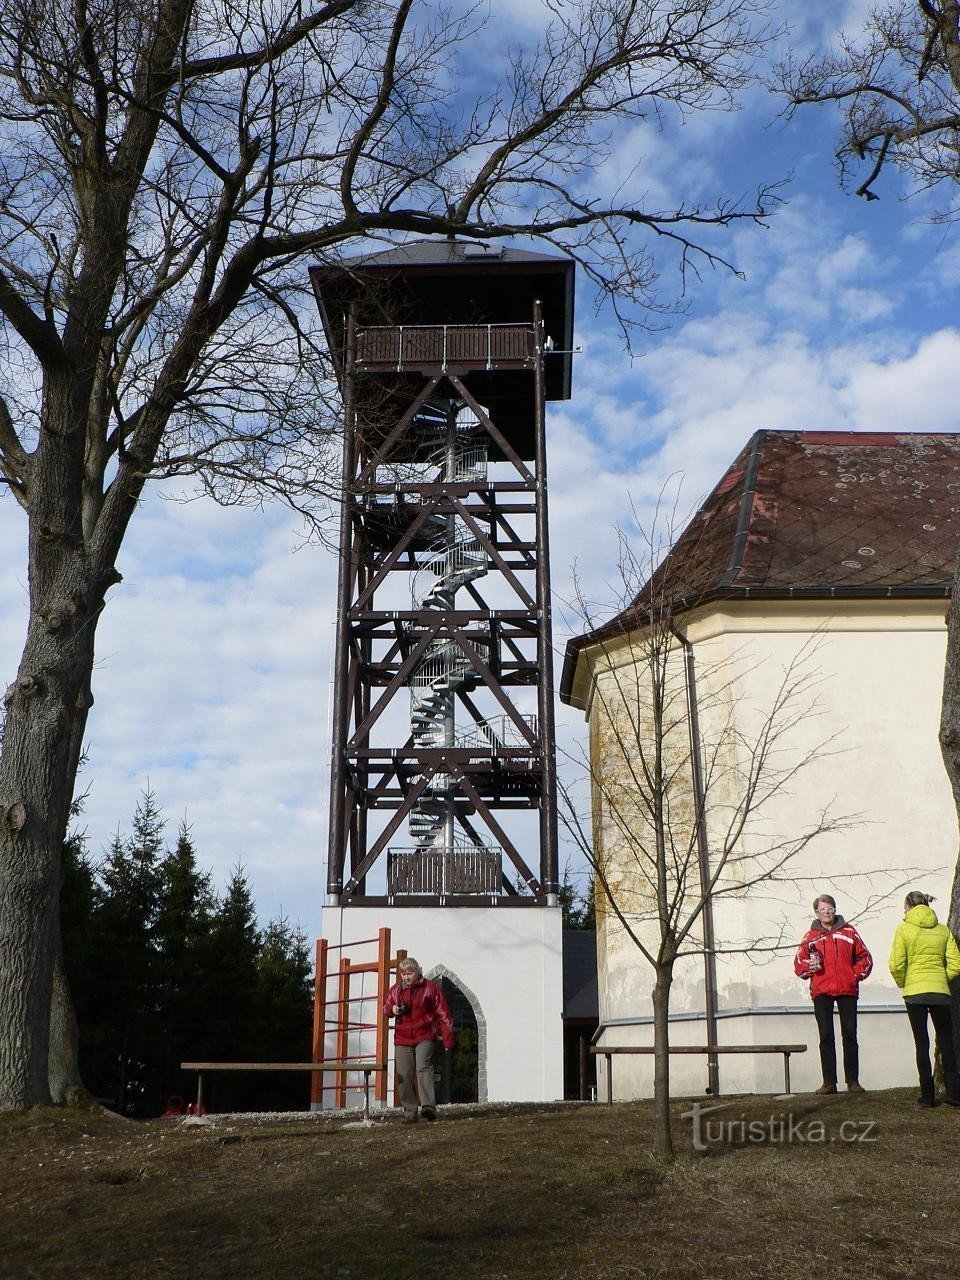 St. Margareta, tháp quan sát